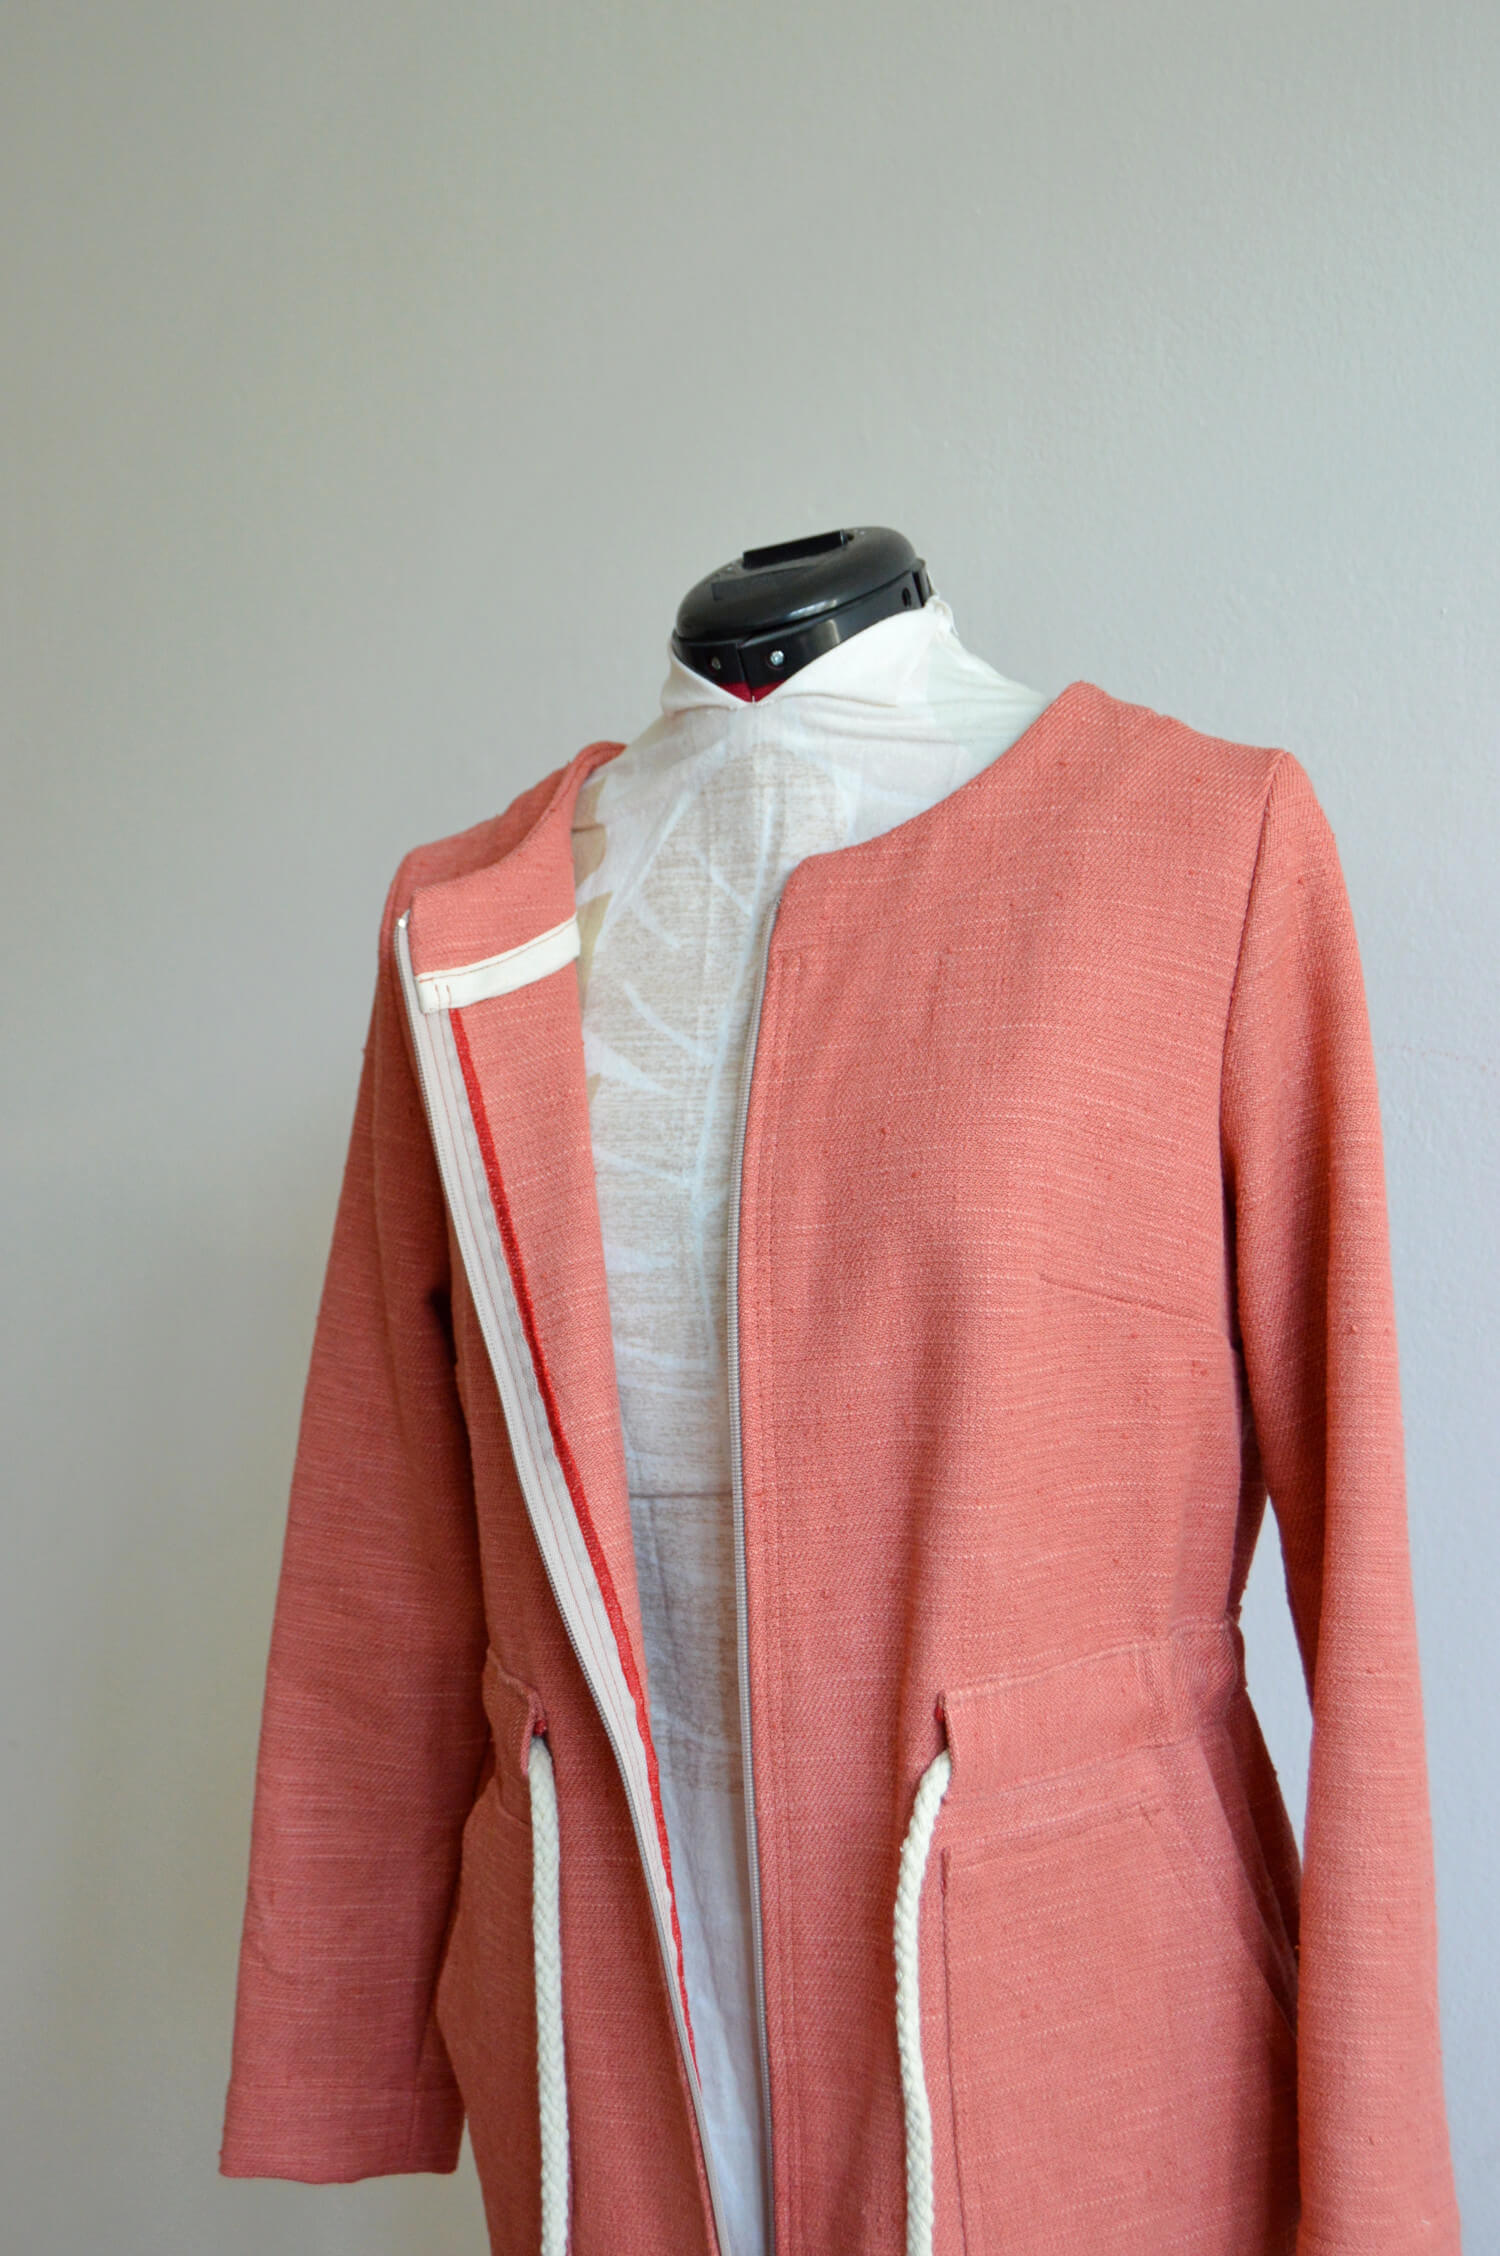 Upcyklovaná ružová bunda od slovenskej návrhárky